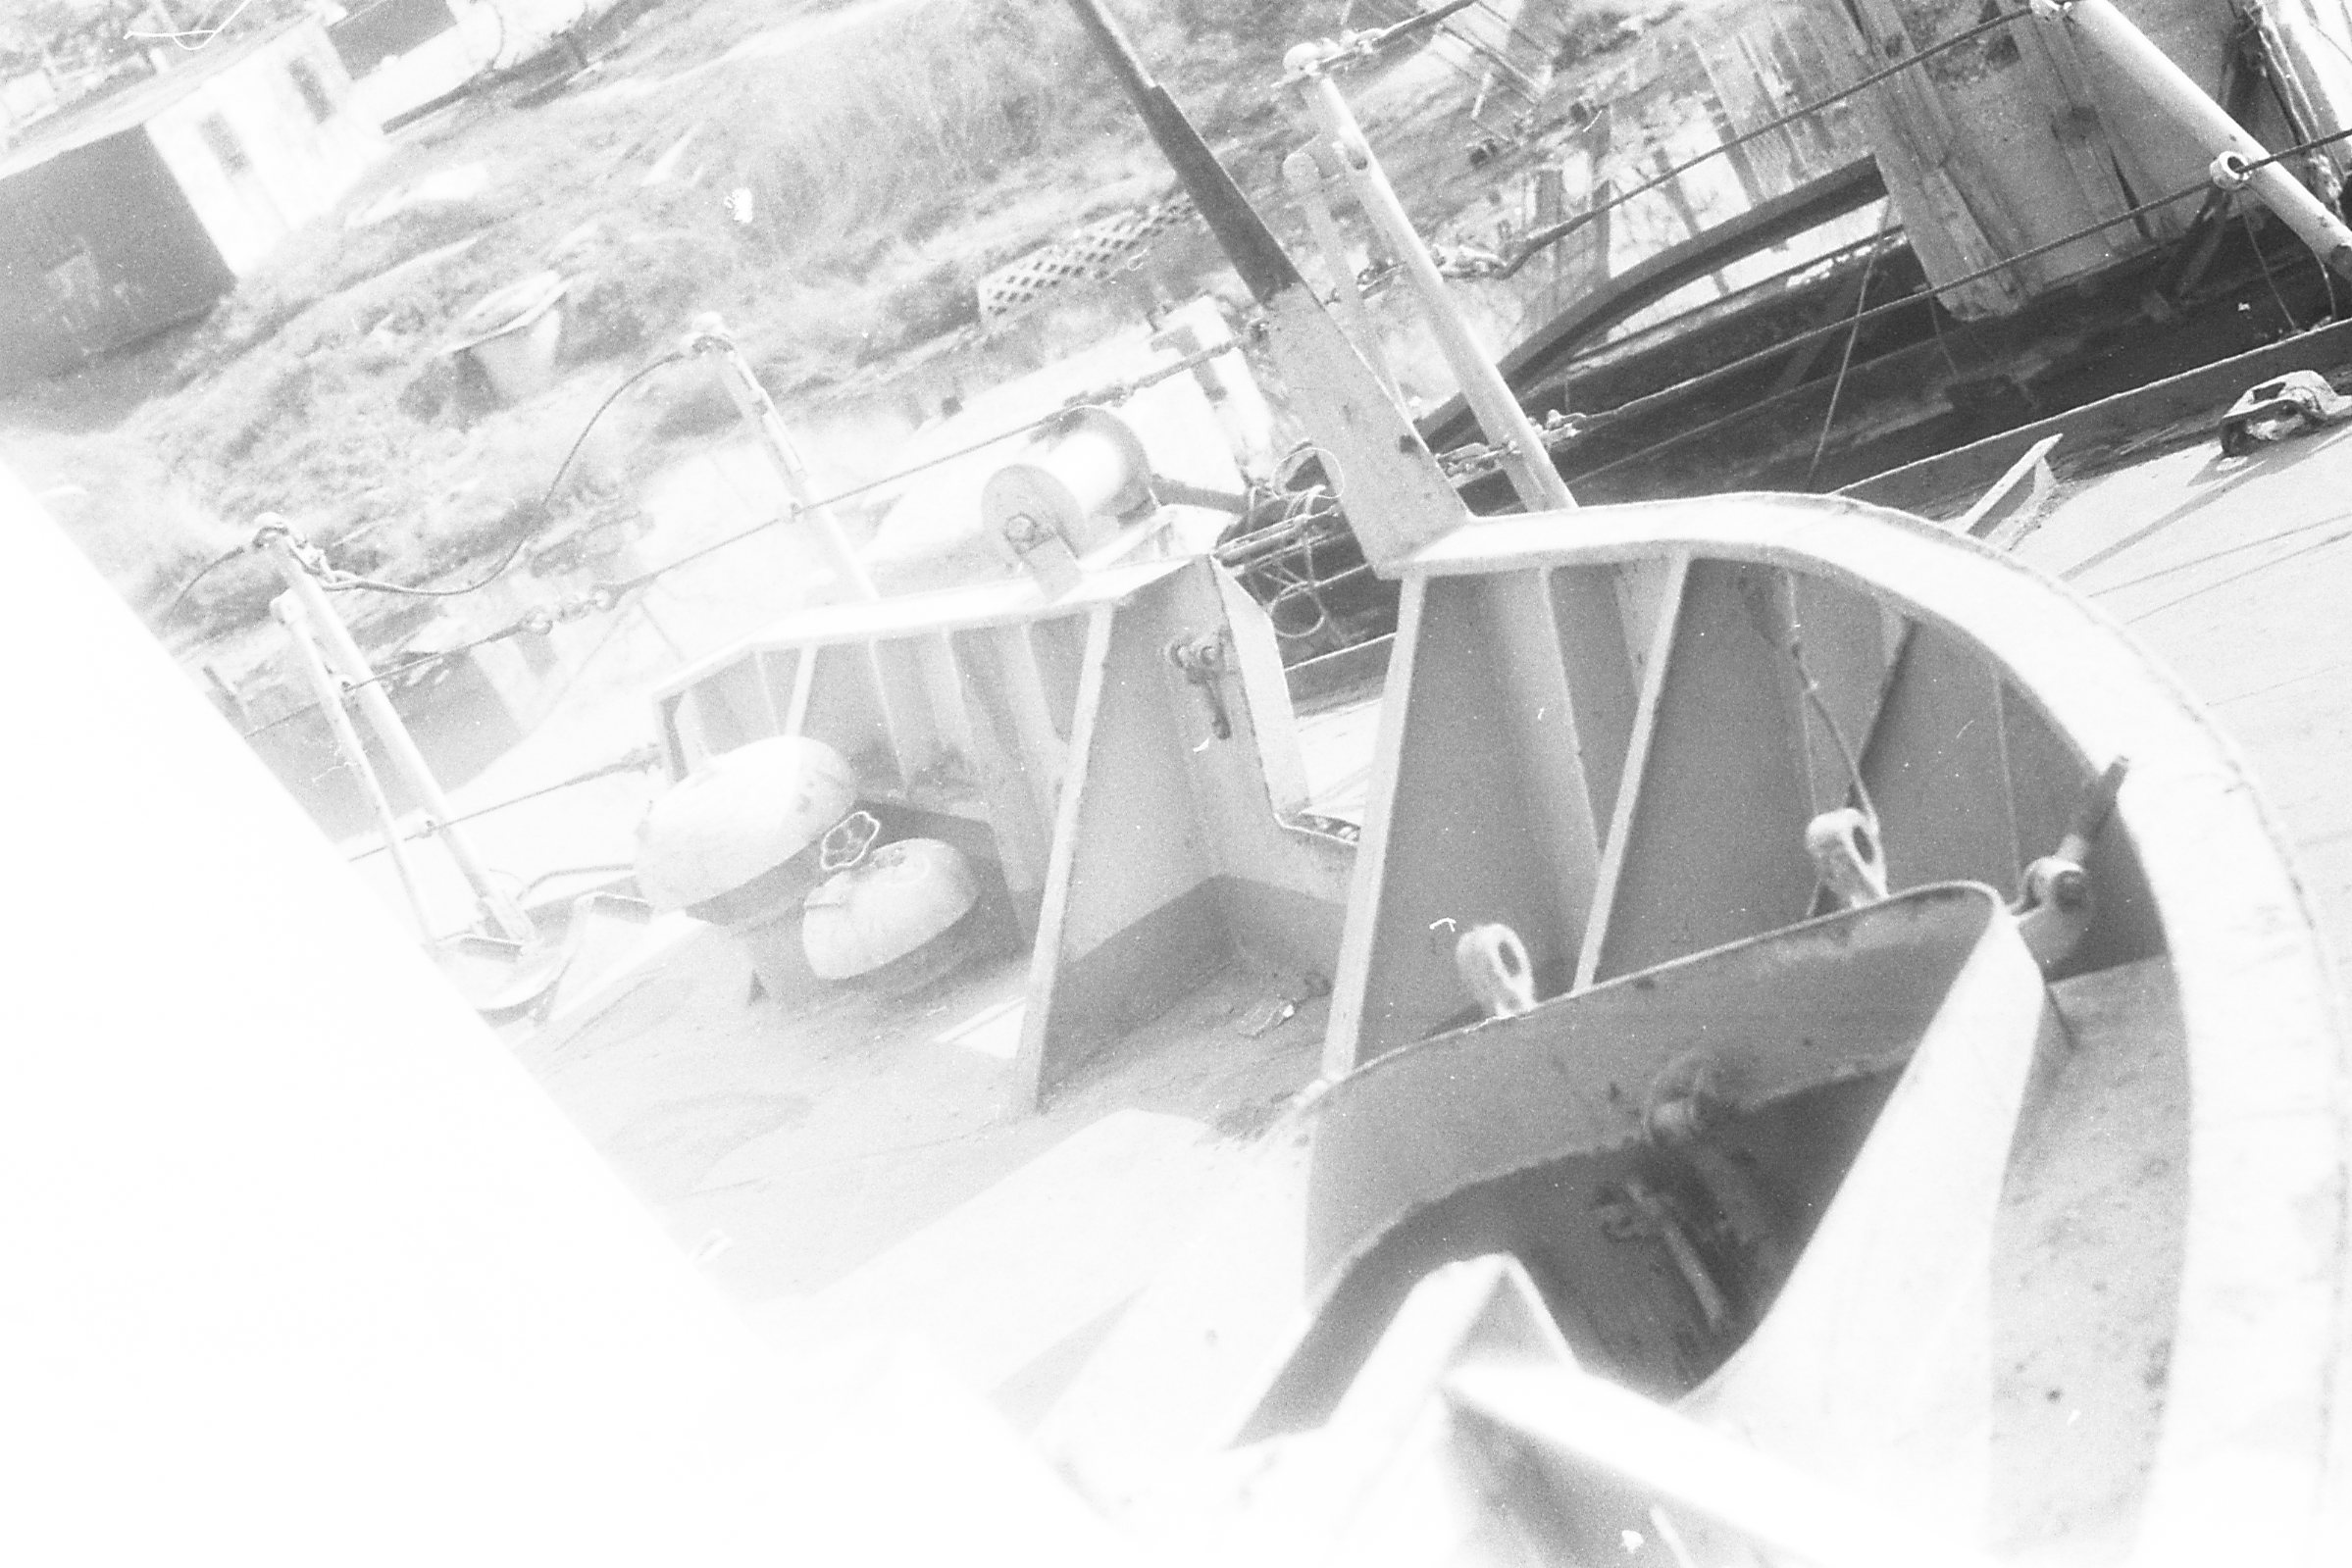 Внутренняя  кормовая часть левого борта волнолома Солидного борт 511 05 1988 фото Солнцева Н.Н..jpg